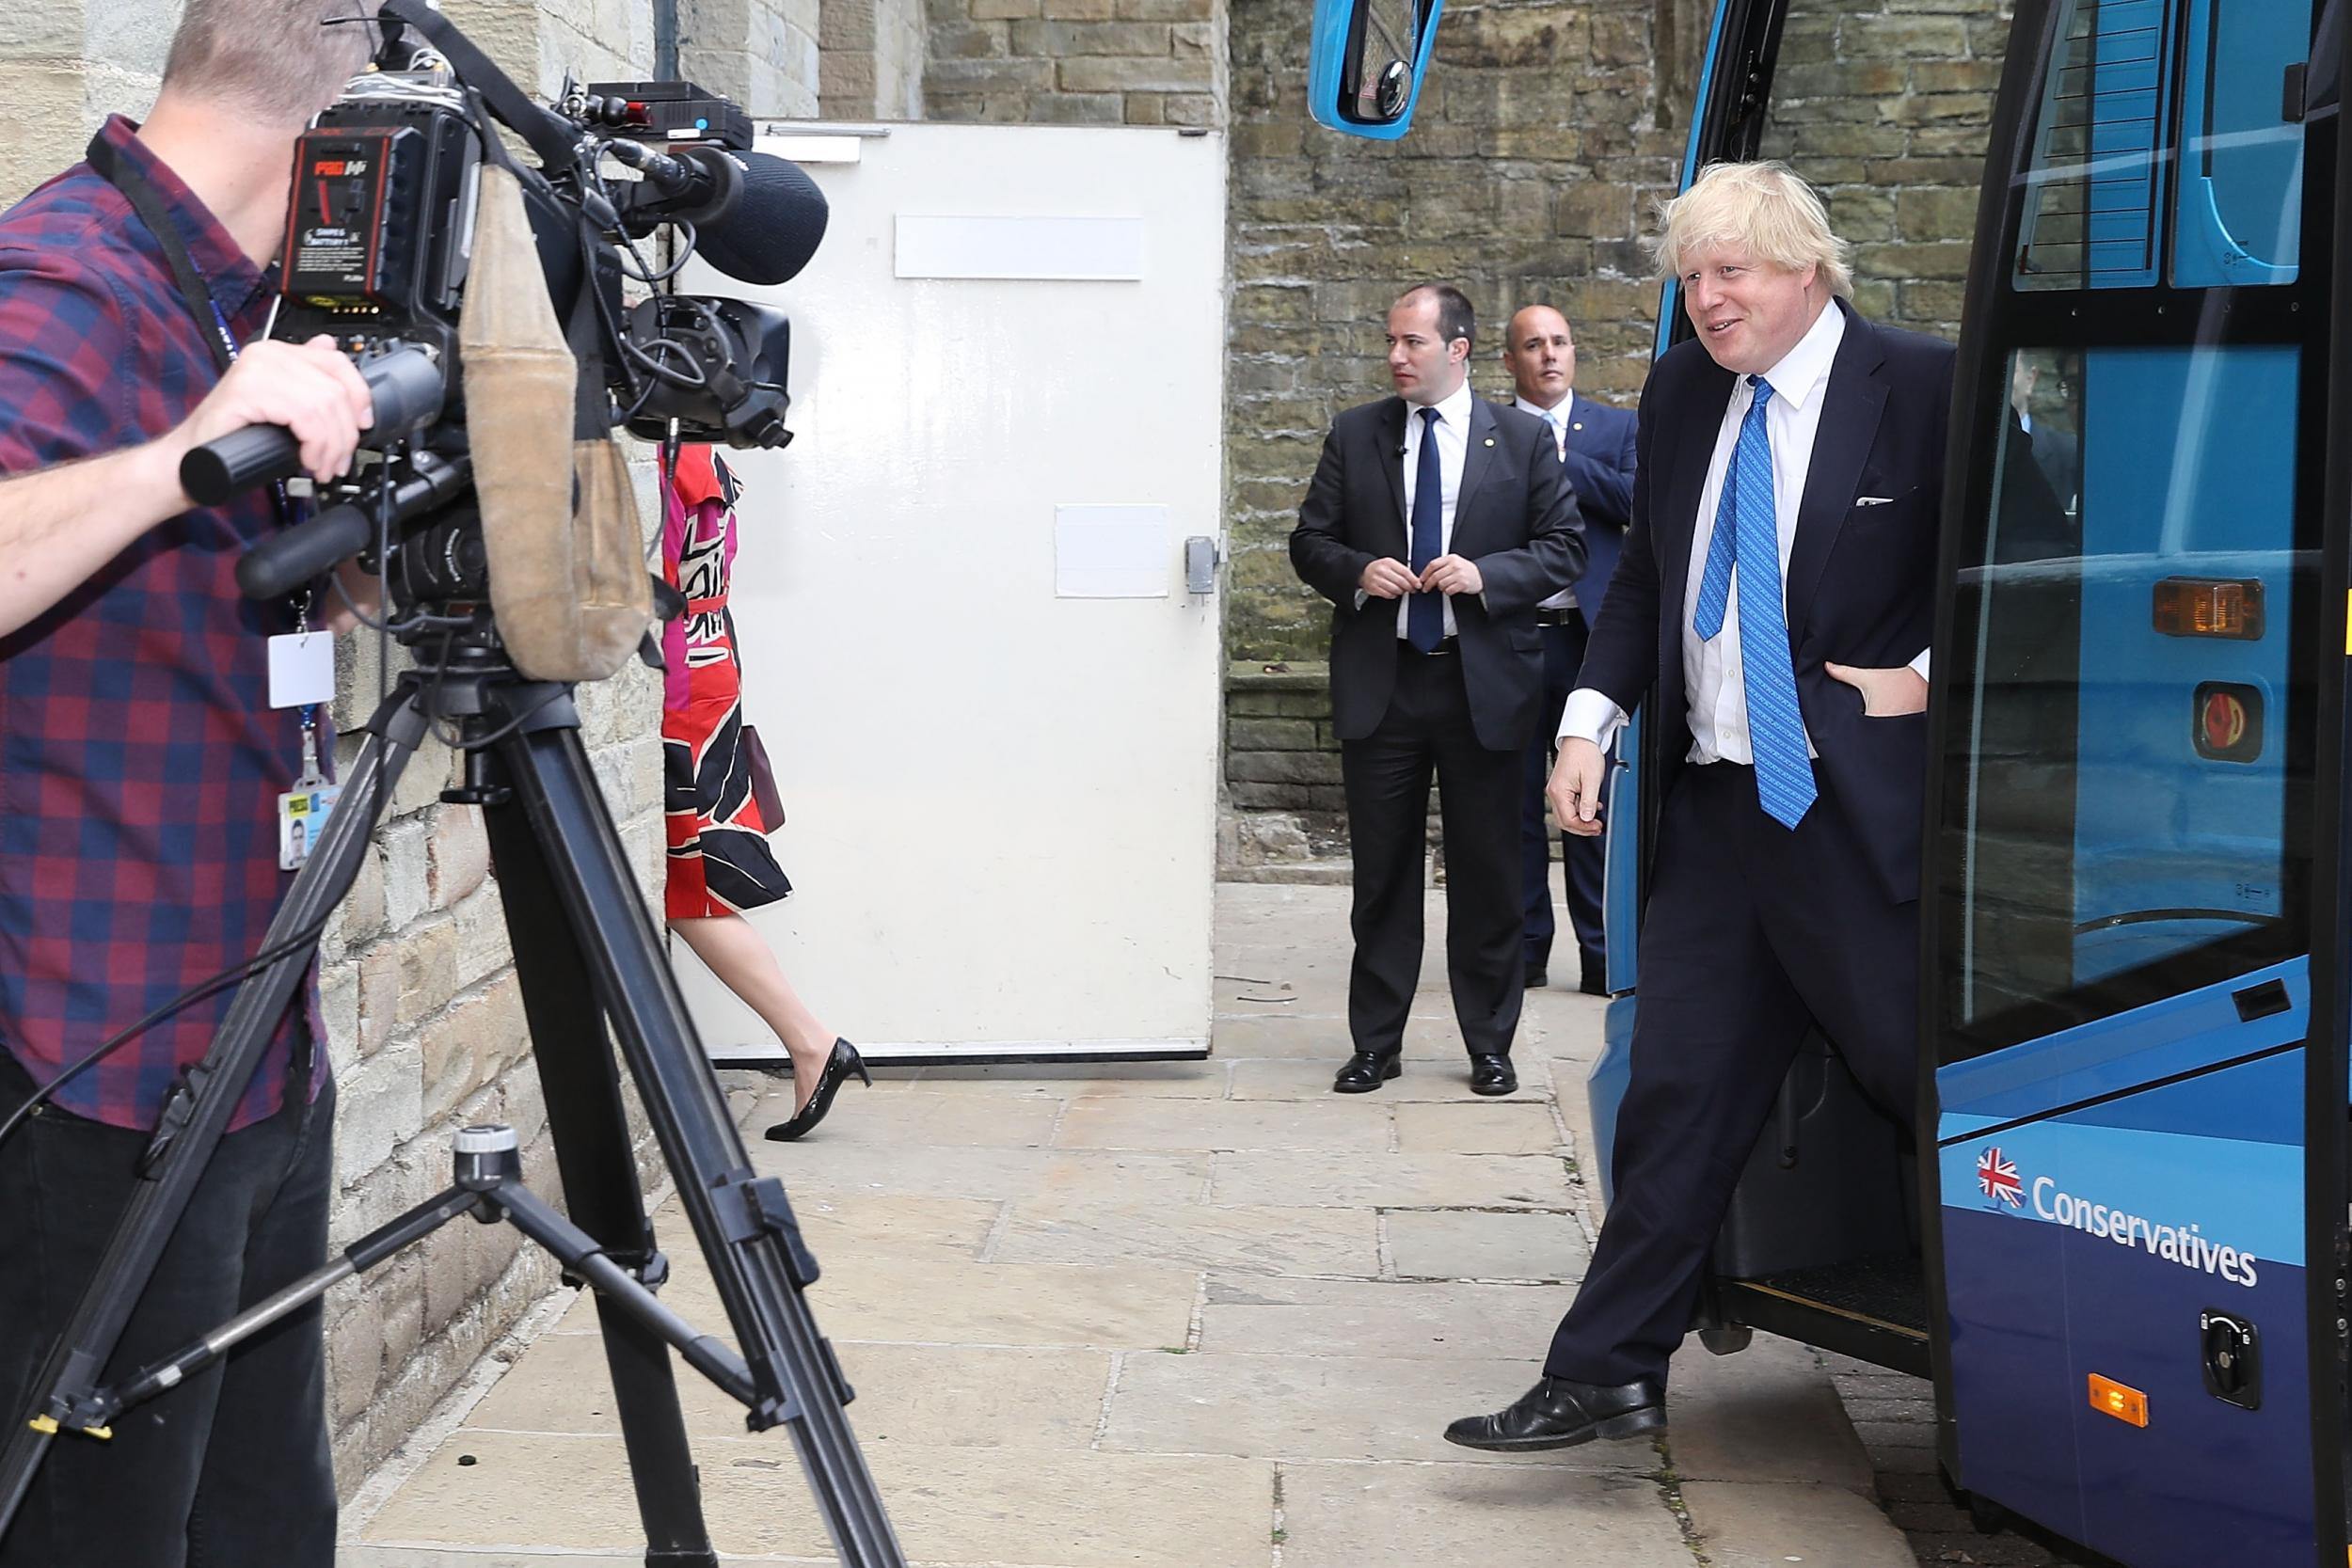 Foreign Secretary Boris Johnson would not criticize Donald Trump